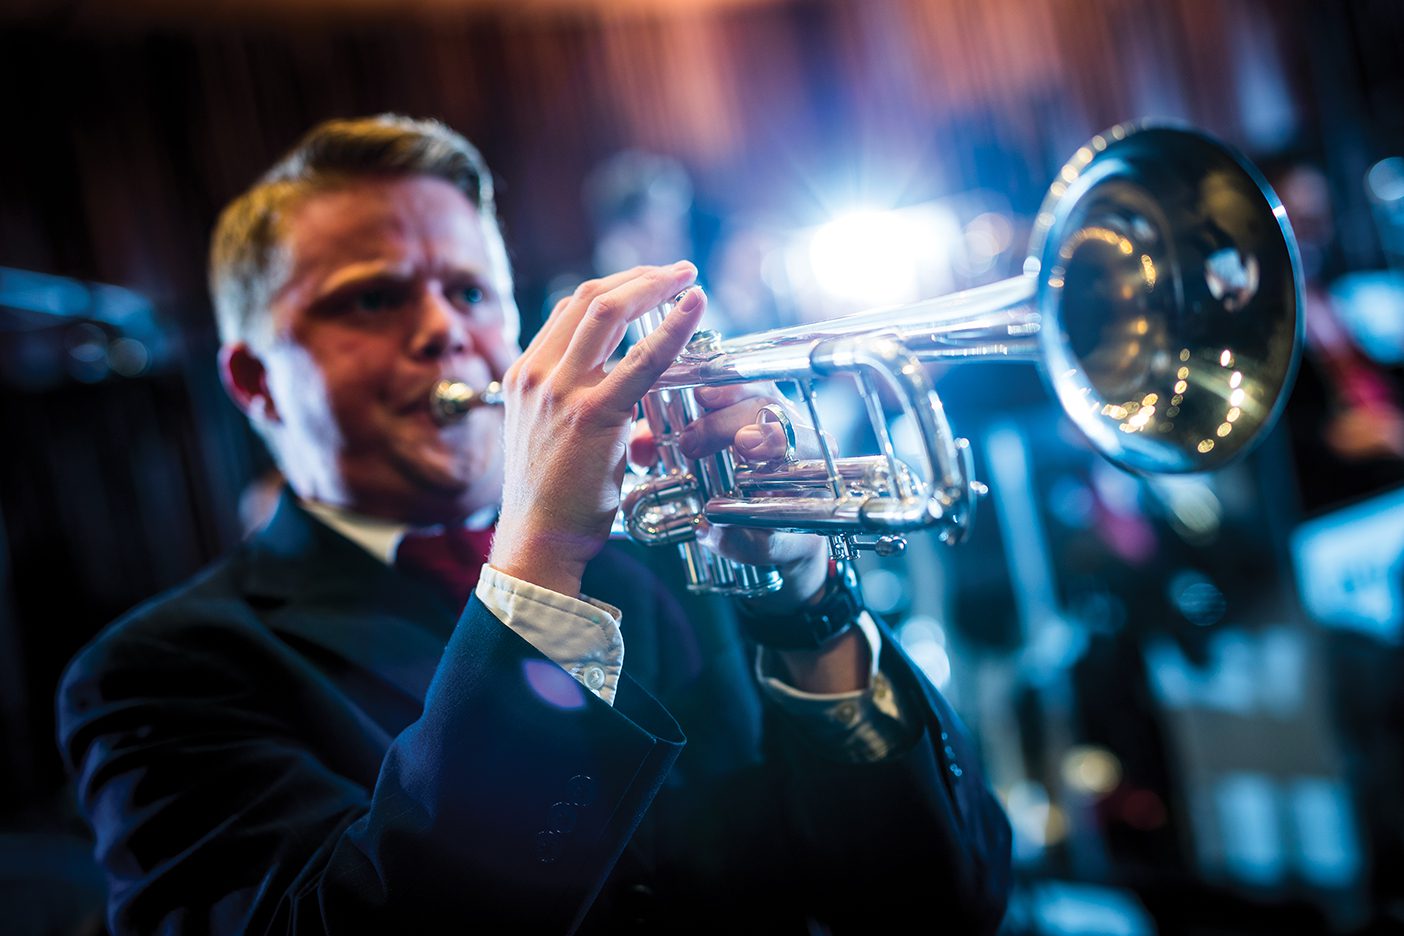 A close-up of a jazz trumpet player